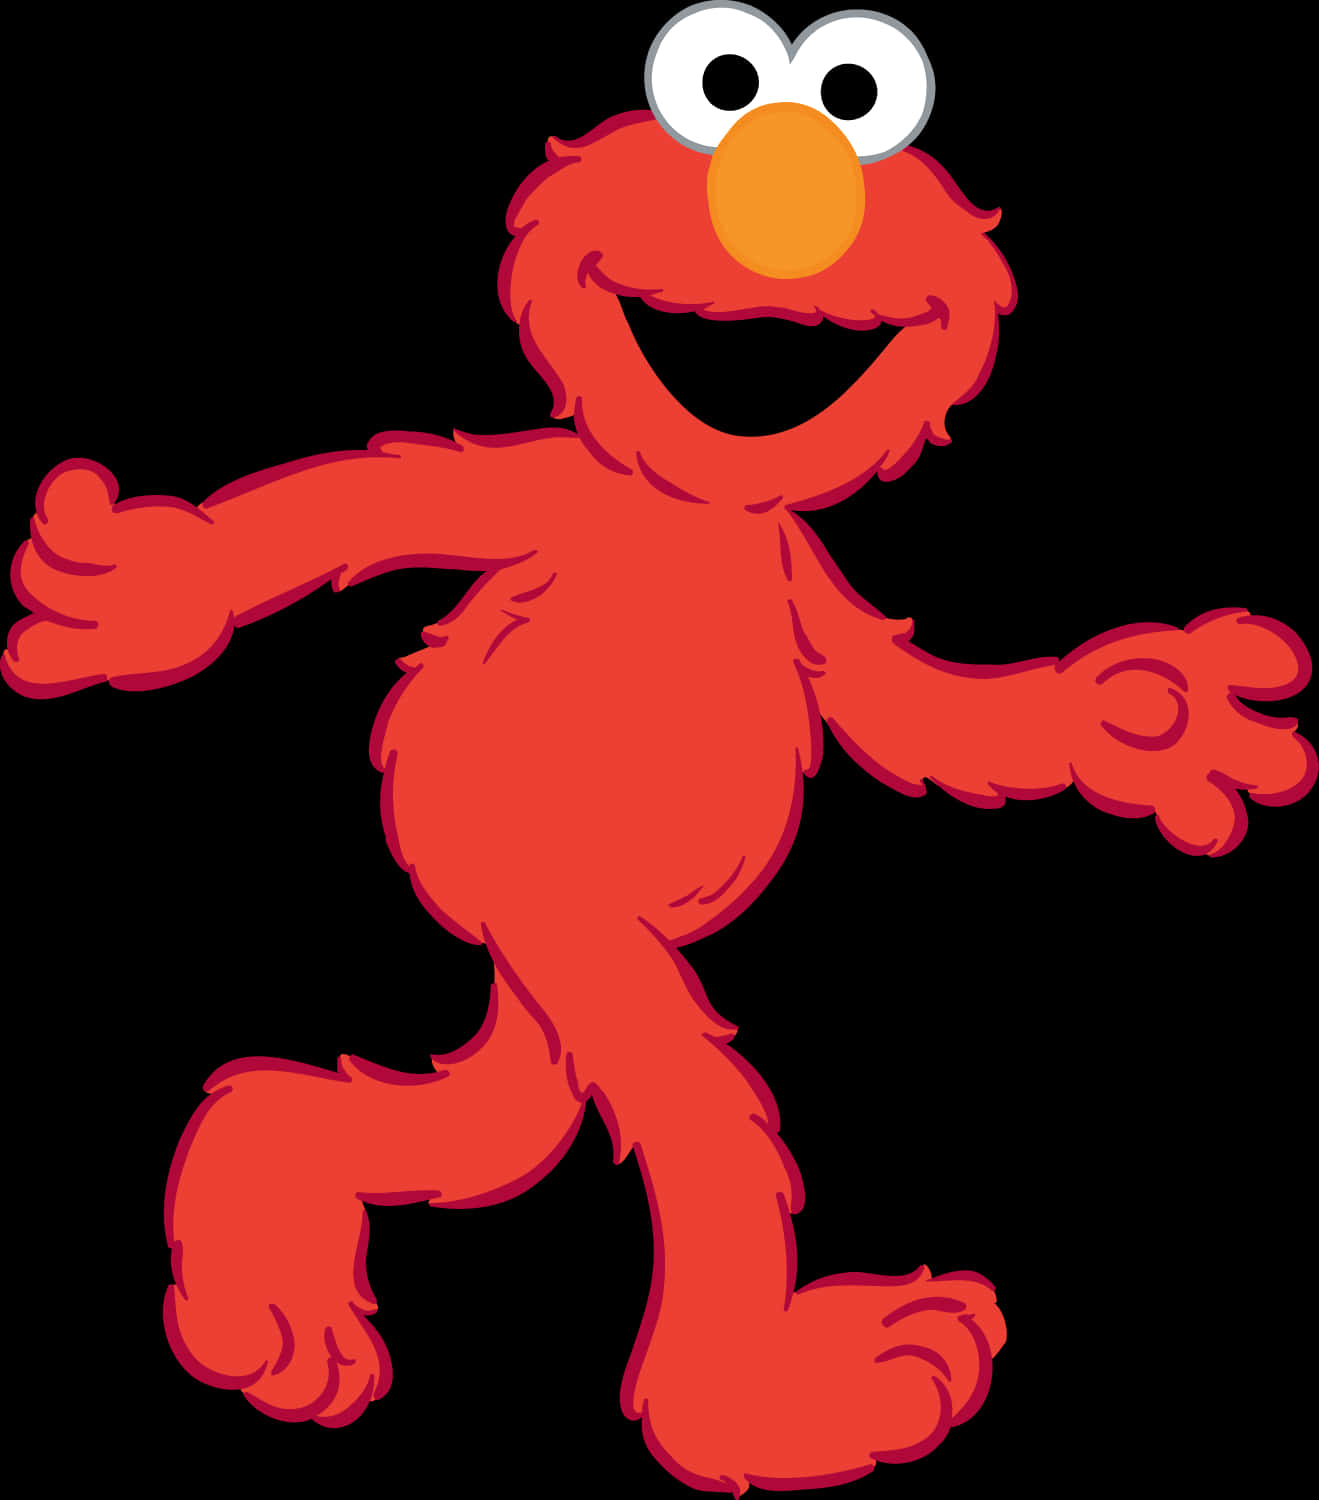 A Cartoon Of A Red Monster